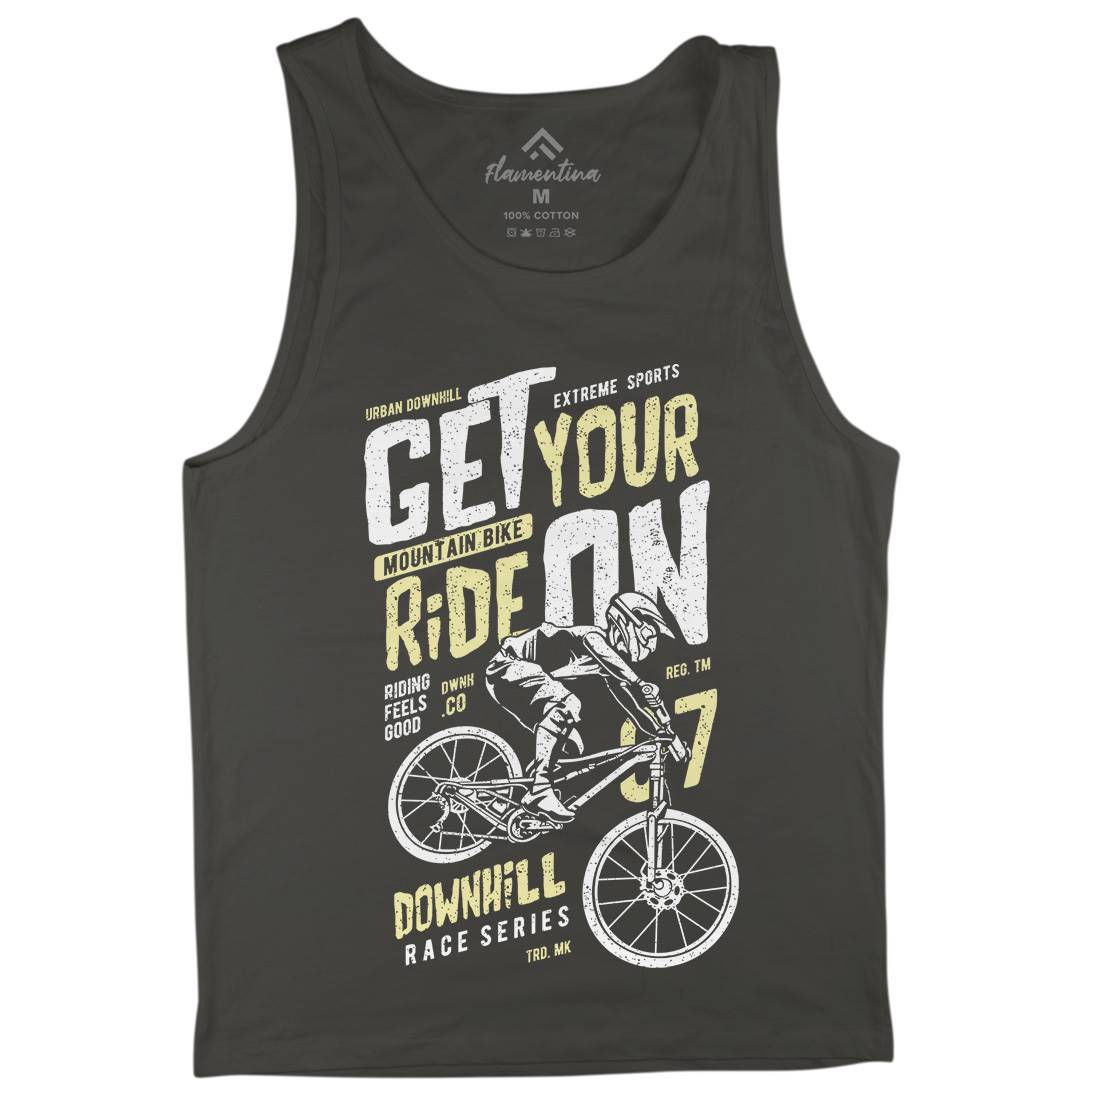 Get Your Ride Mens Tank Top Vest Bikes A673